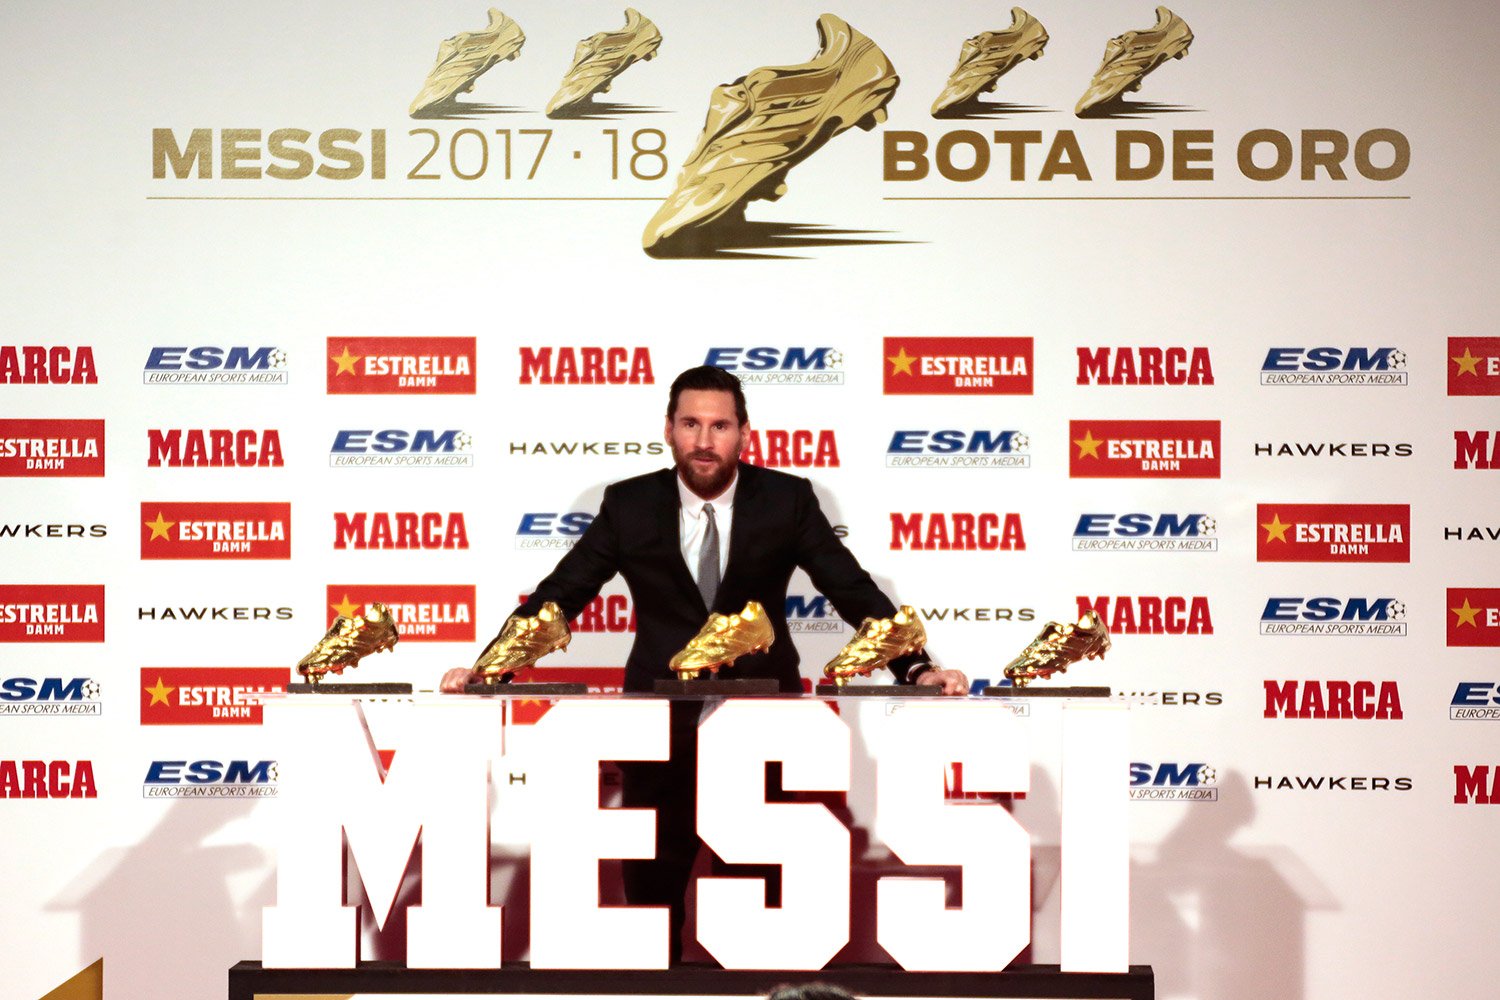 Mirilla sobresalir Admirable Fútbol en Movistar Plus+ on Twitter: "En 2018... Lionel Messi, Bota de Oro.  https://t.co/Xa3yoJRyCm" / Twitter